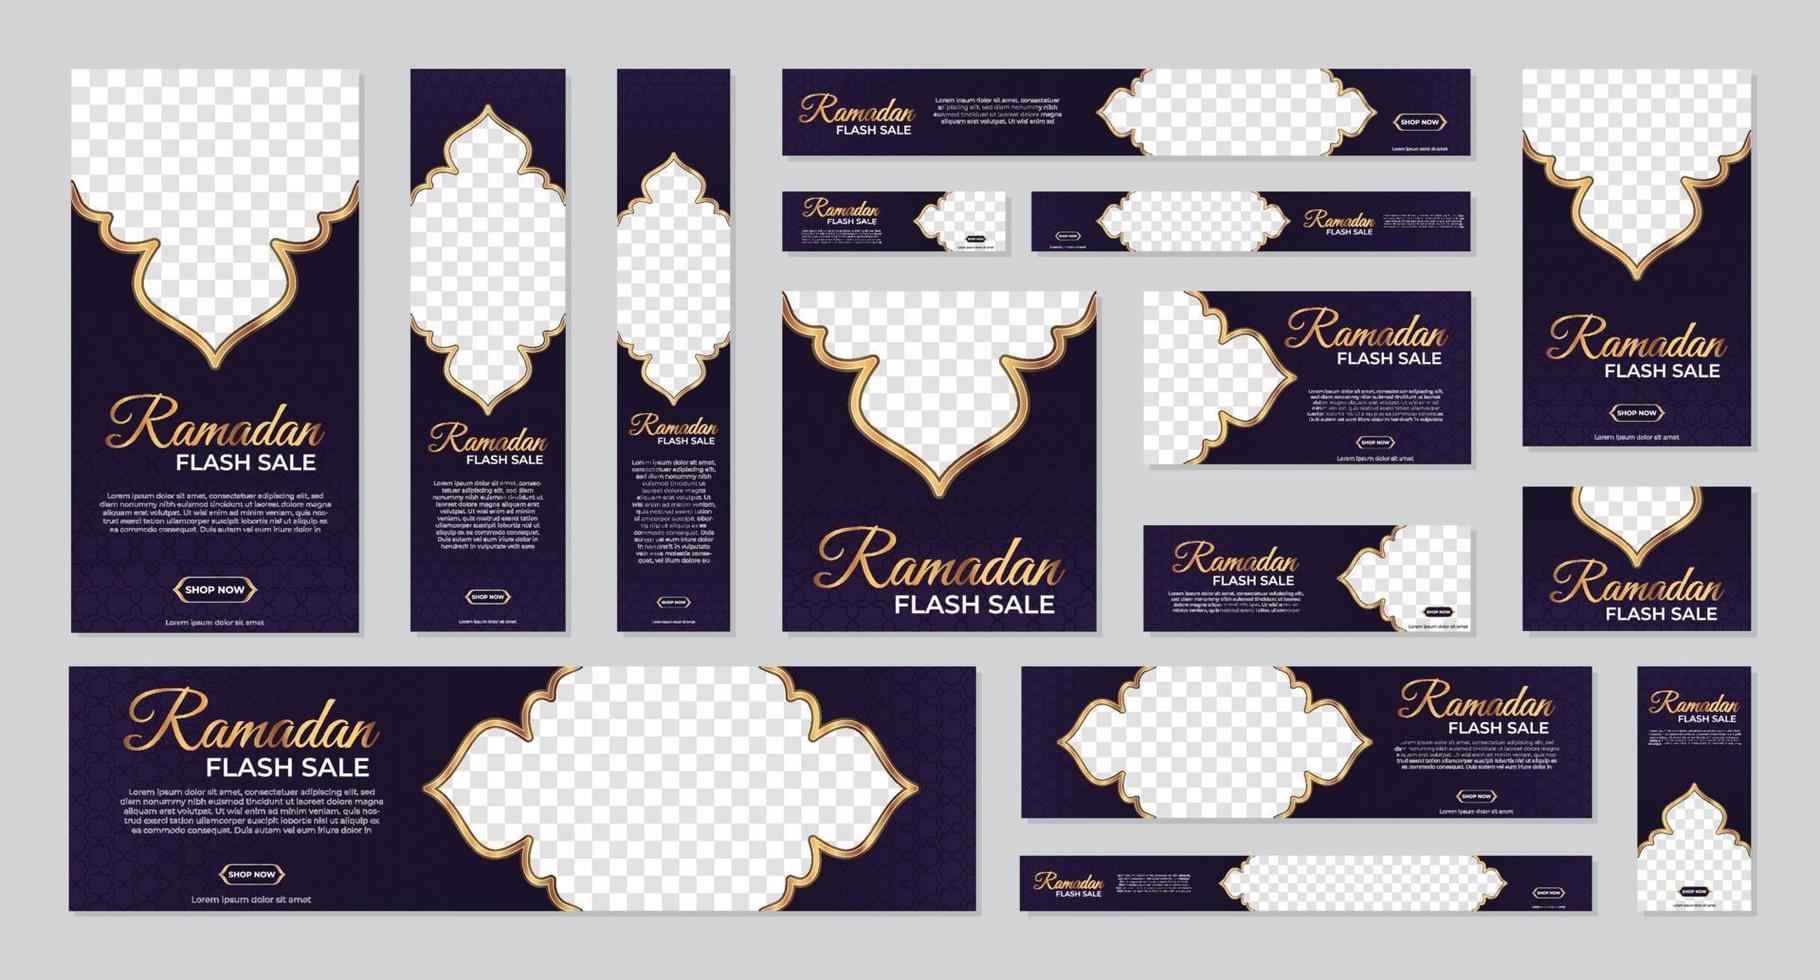 Ramadan sale promotion kit template with arabian style. Set of Ramadan sale web banner template design. Vector illustration